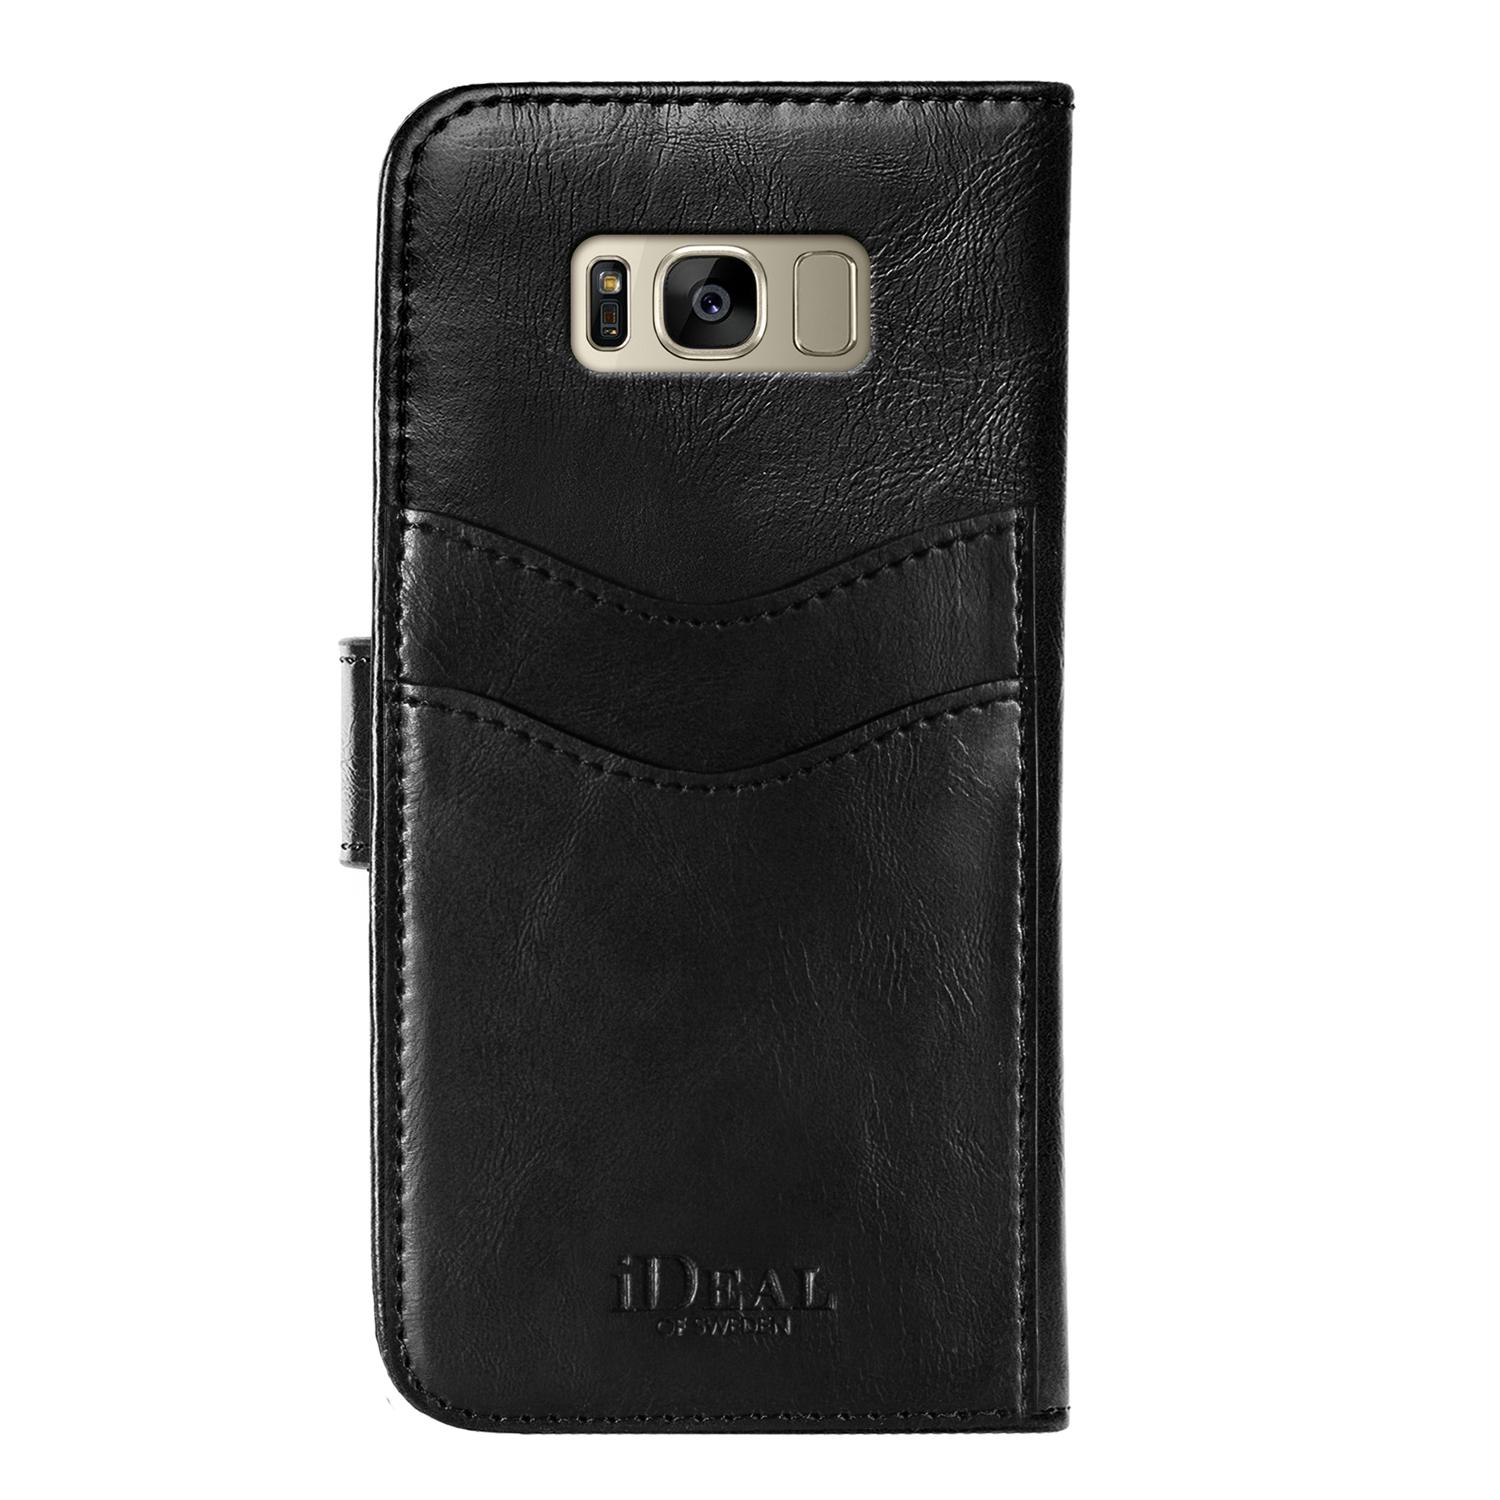 Magnet Wallet+ Galaxy S8 Black